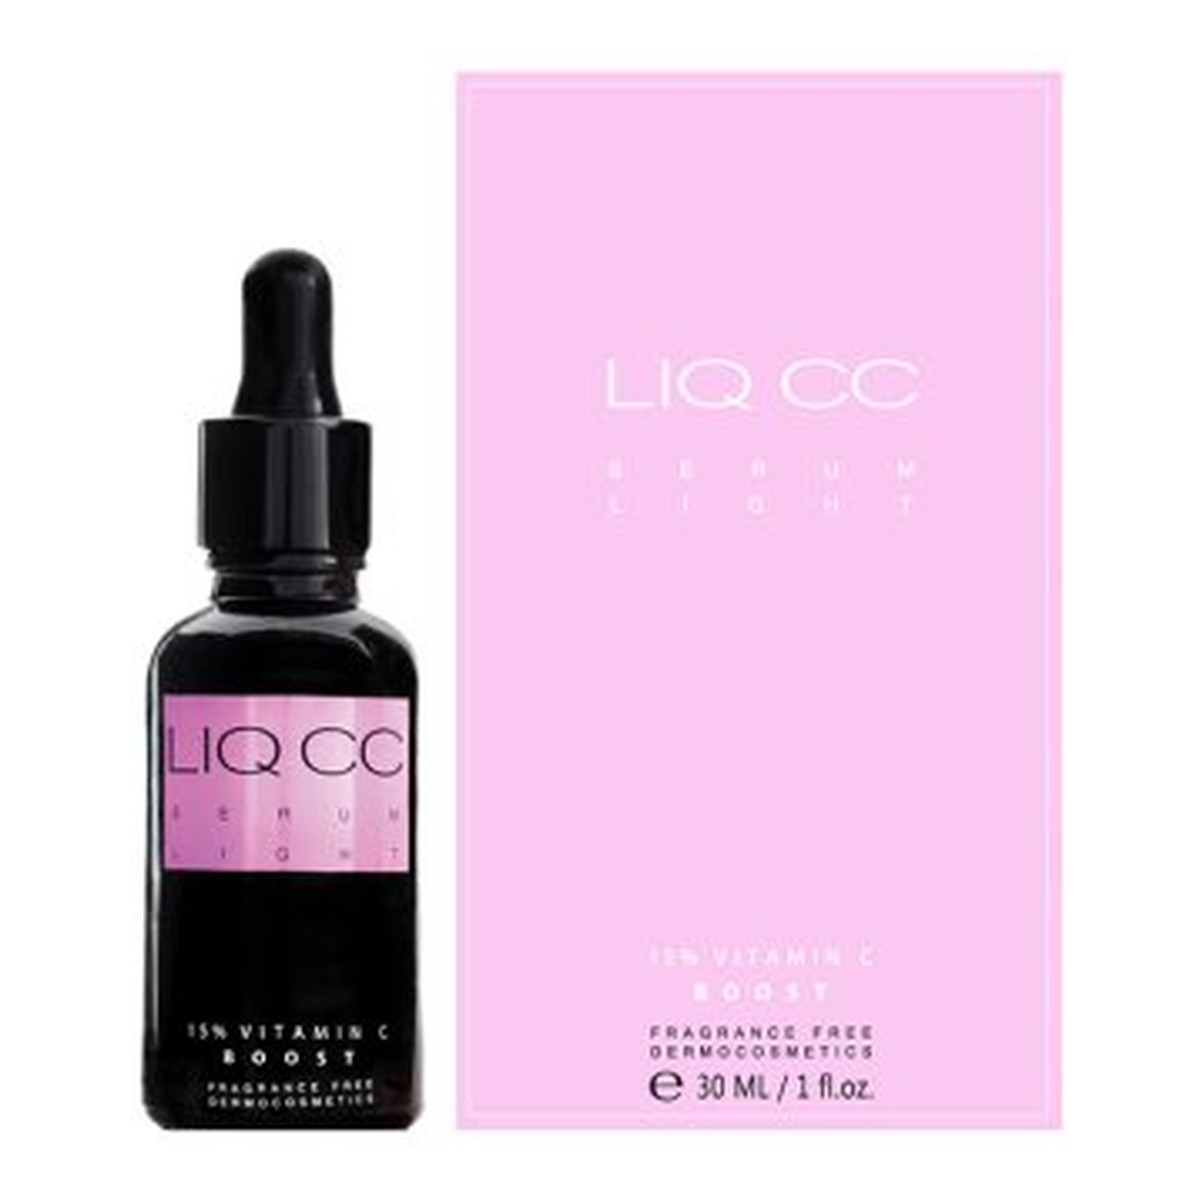 LIQC Dermocosmetics LIQ CC Serum Light 15% Vitamin C BOOST Serum do twarzy z witaminą C 30ml